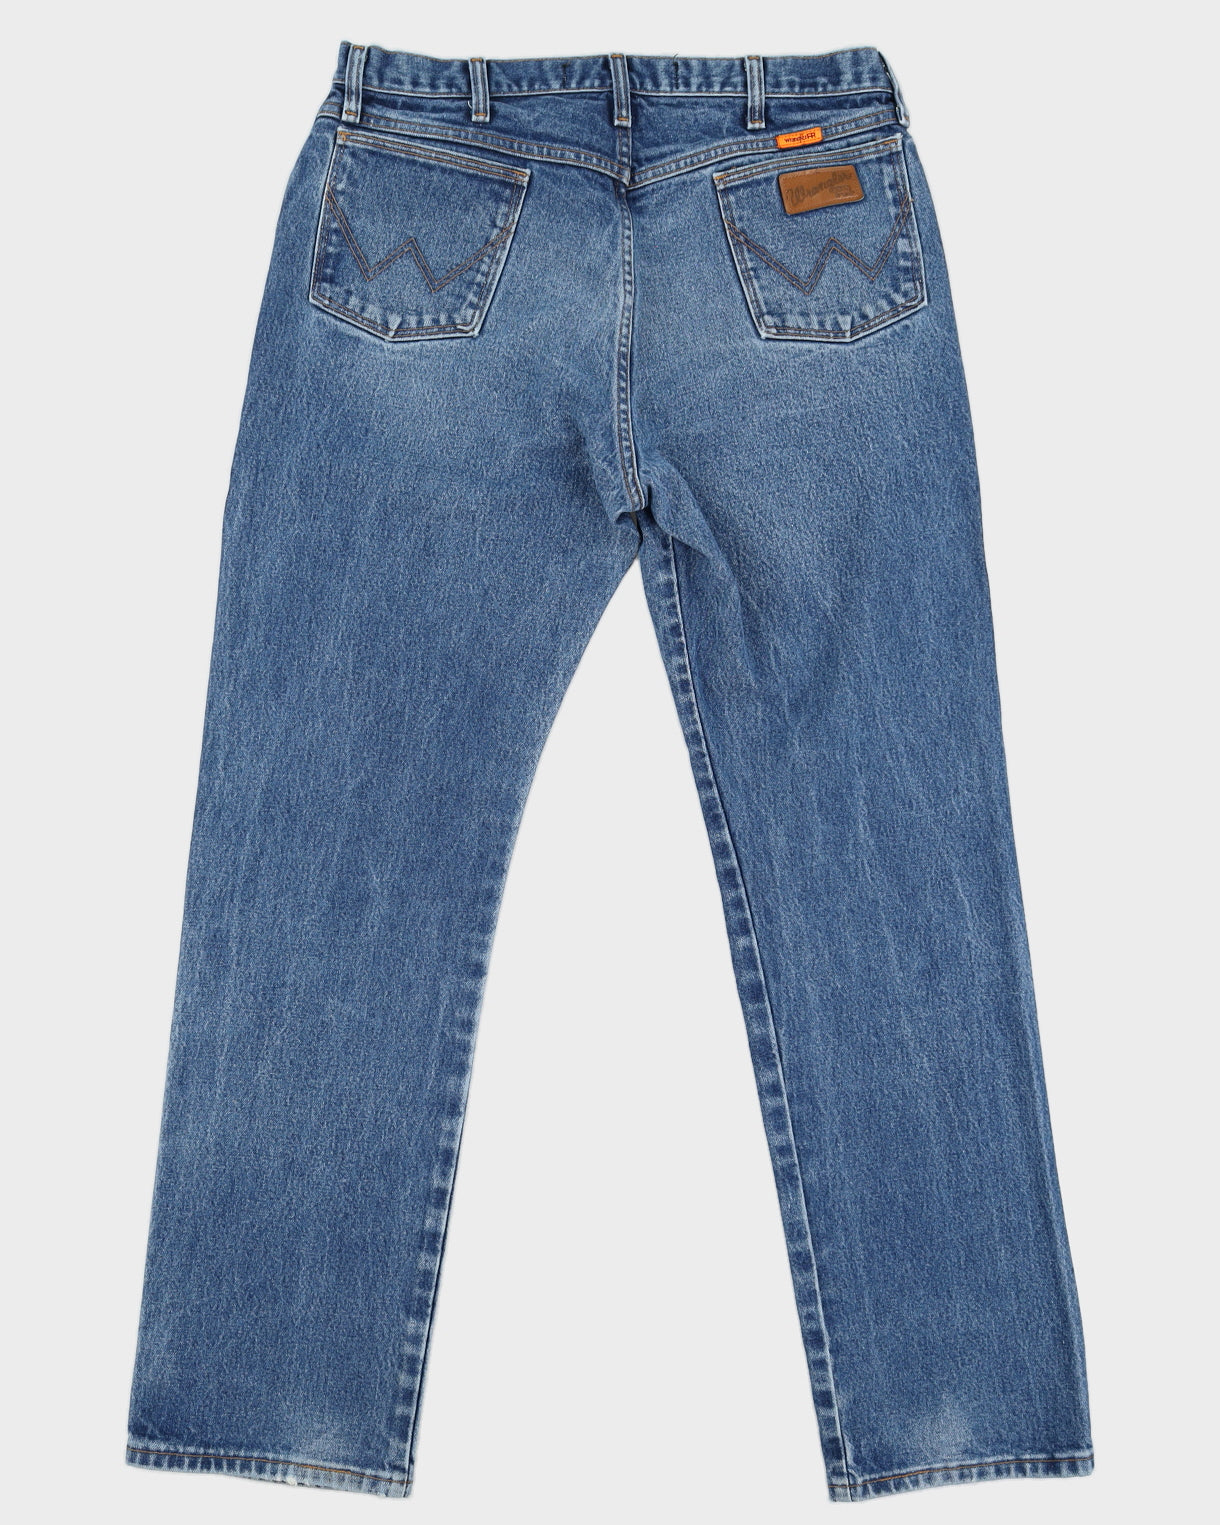 Vintage 00s Wrangler Medium Wash Flame Resistant Denim Jeans - W36 L34